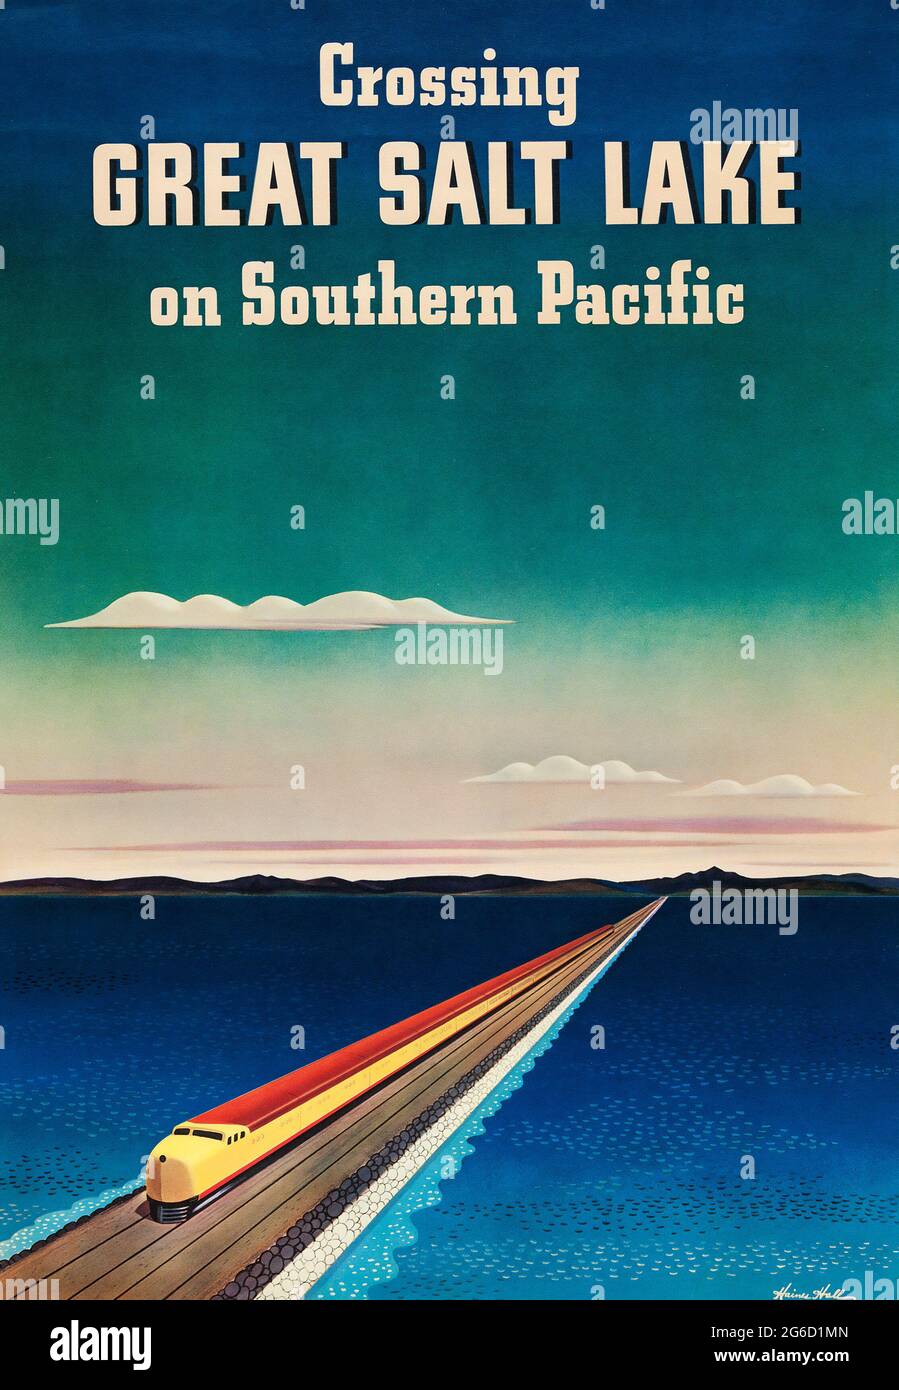 Reiseplakat Great Salt Lake „Crossing Great Salt Lake on Southern Pacific“. (Southern Pacific, 1940) Reiseposter. Werbung für die Eisenbahn. Stockfoto